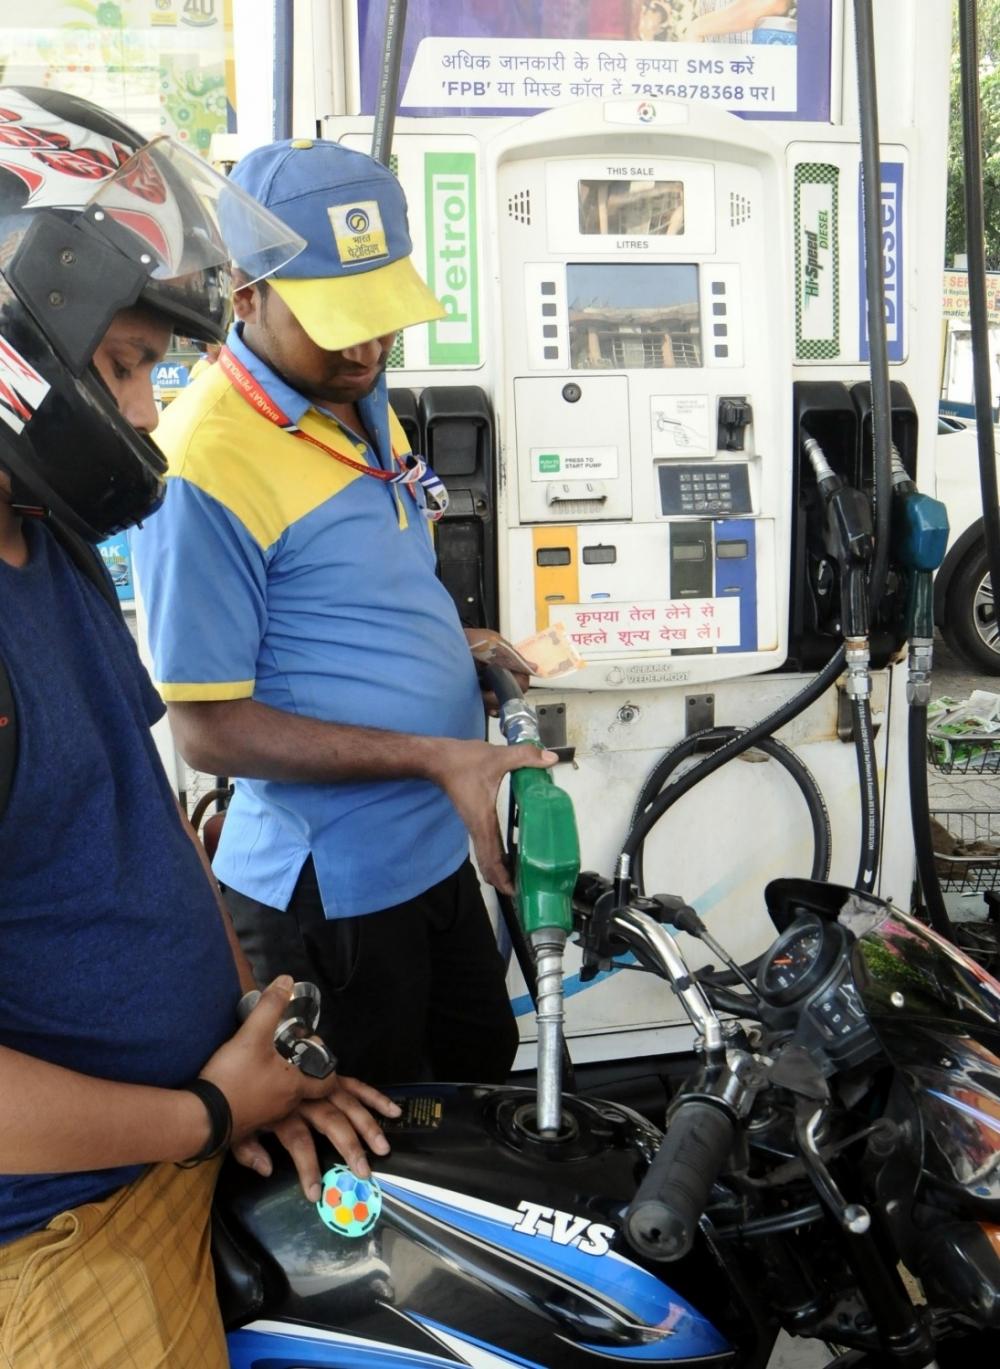 The Weekend Leader - Odisha cuts down VAT on petrol, diesel by 4%